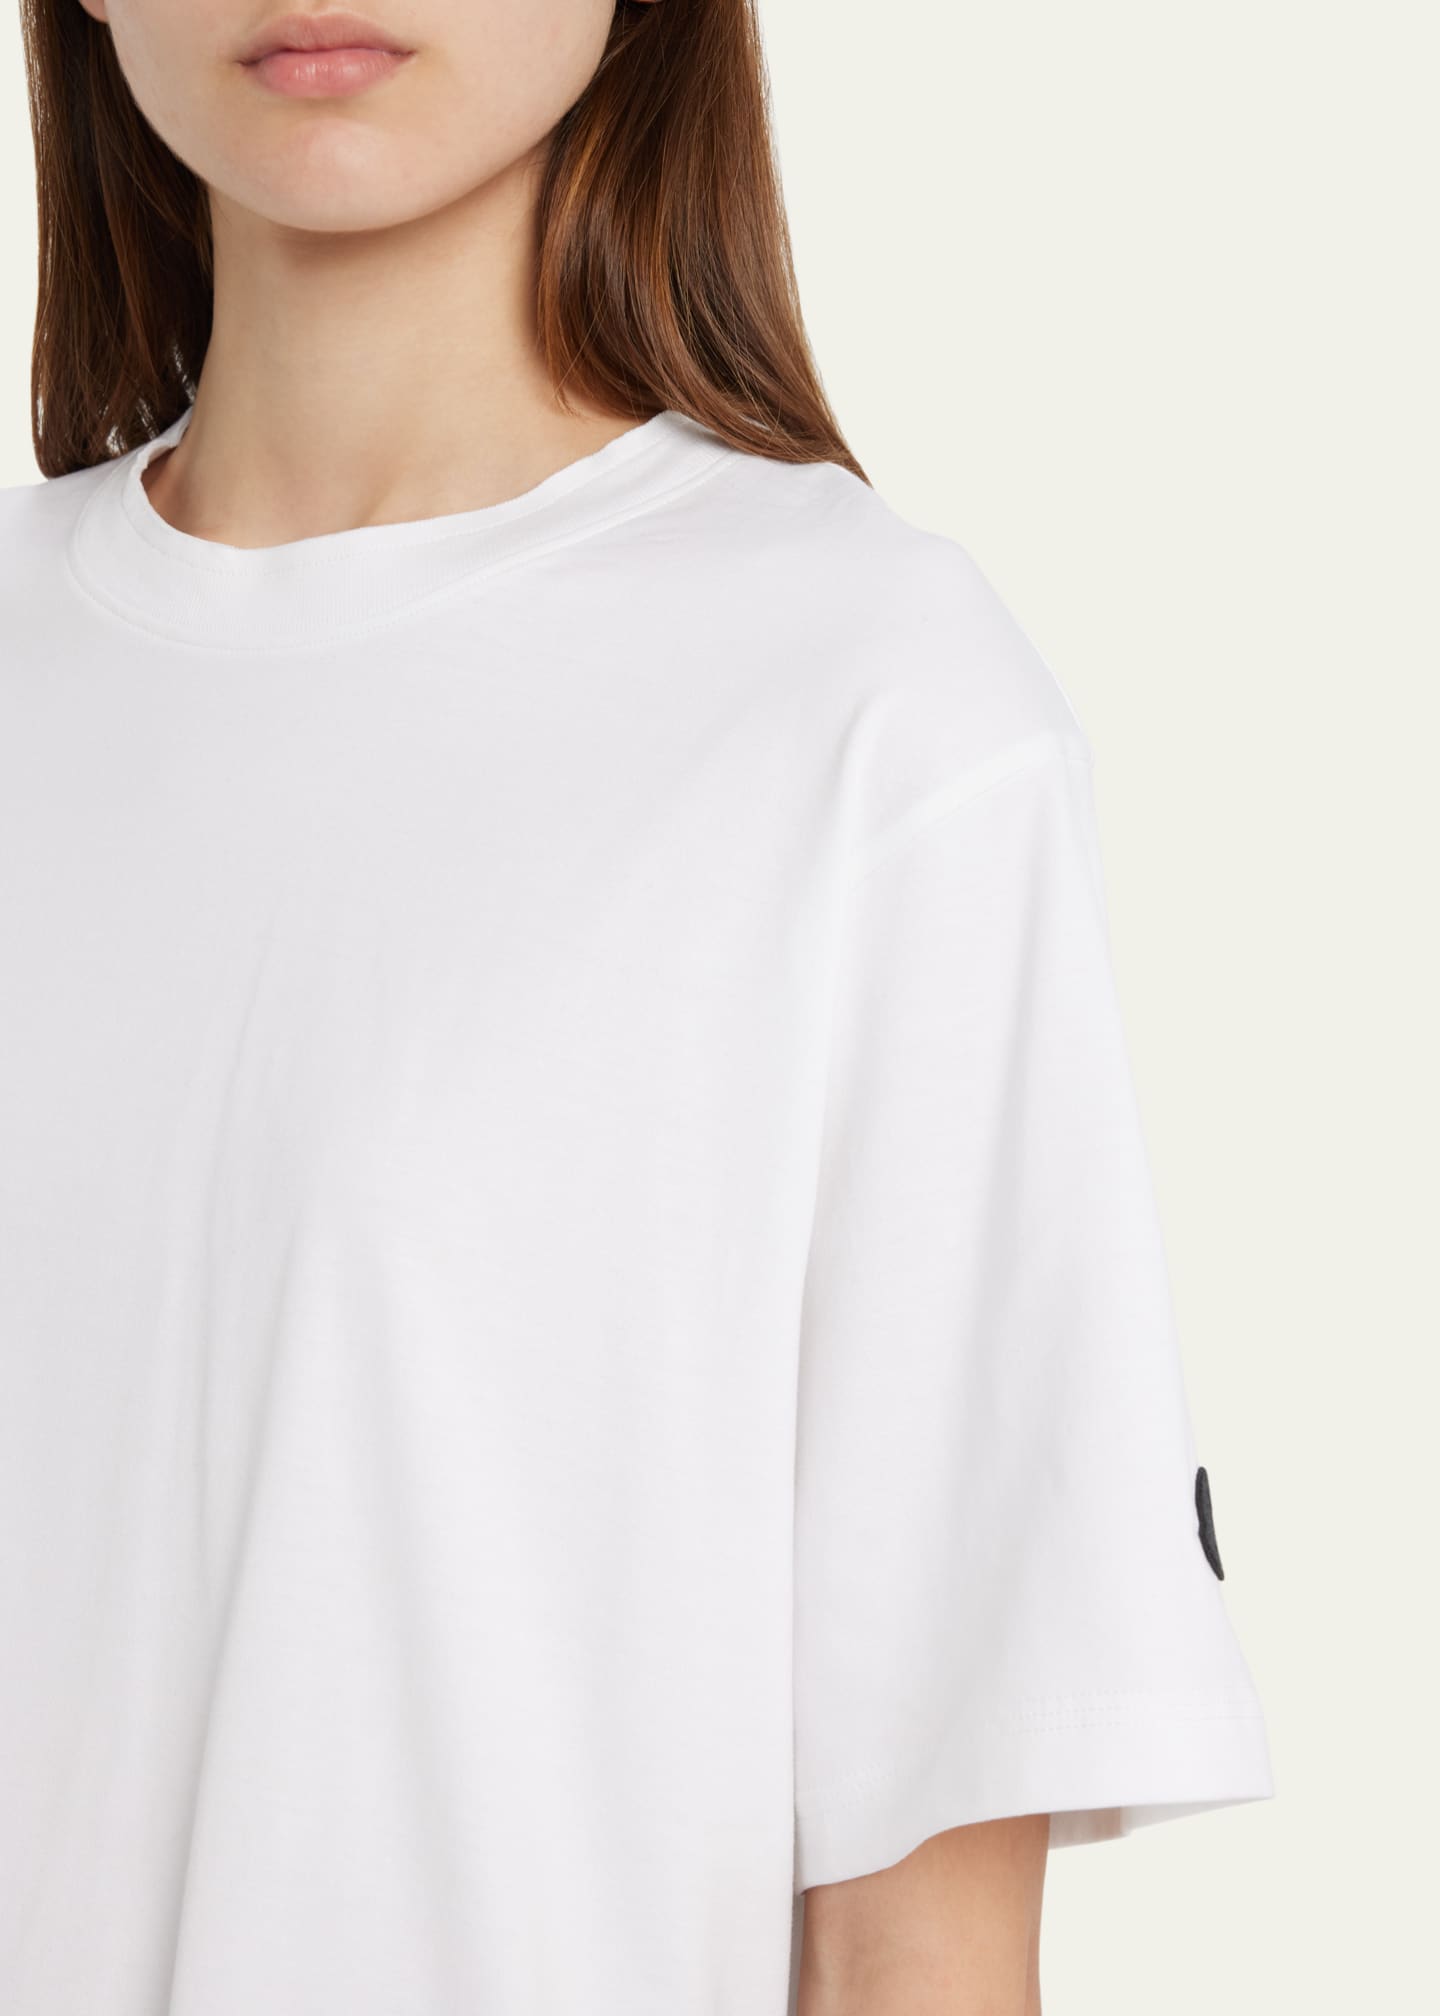 Moncler Genius x Alicia Keys Printed Motif Short Sleeve T-Shirt